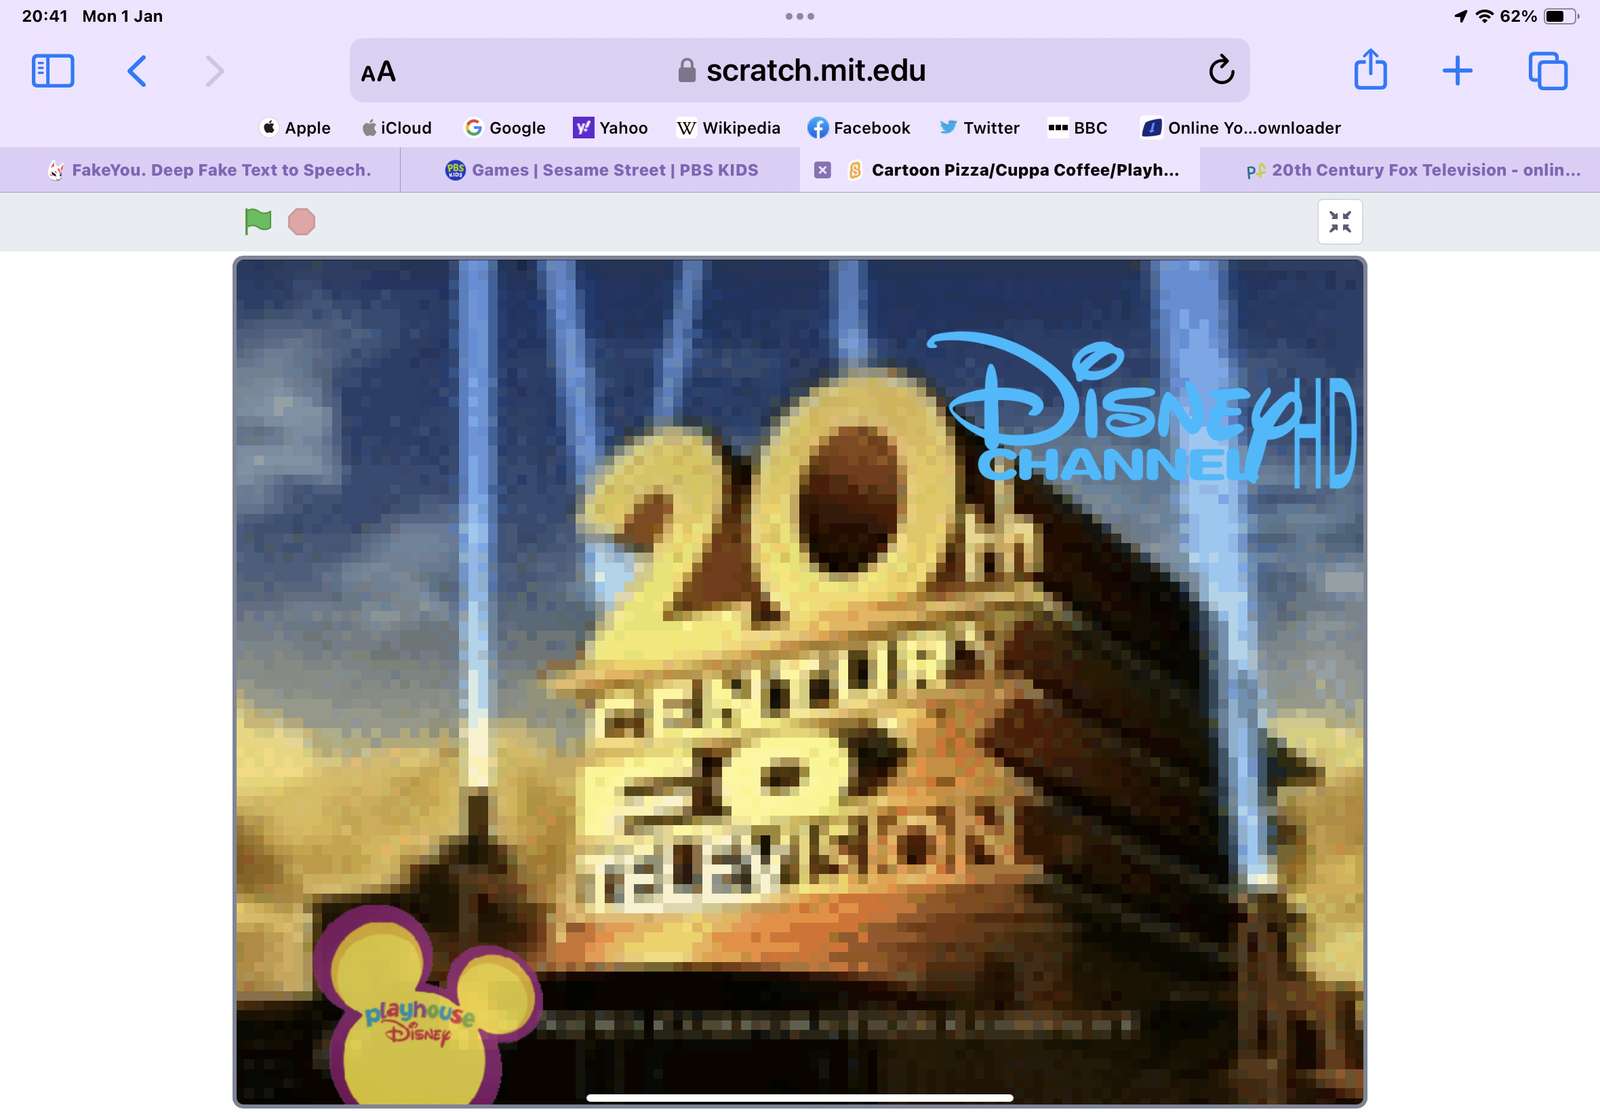 Телевизия 20th Century Fox онлайн пъзел